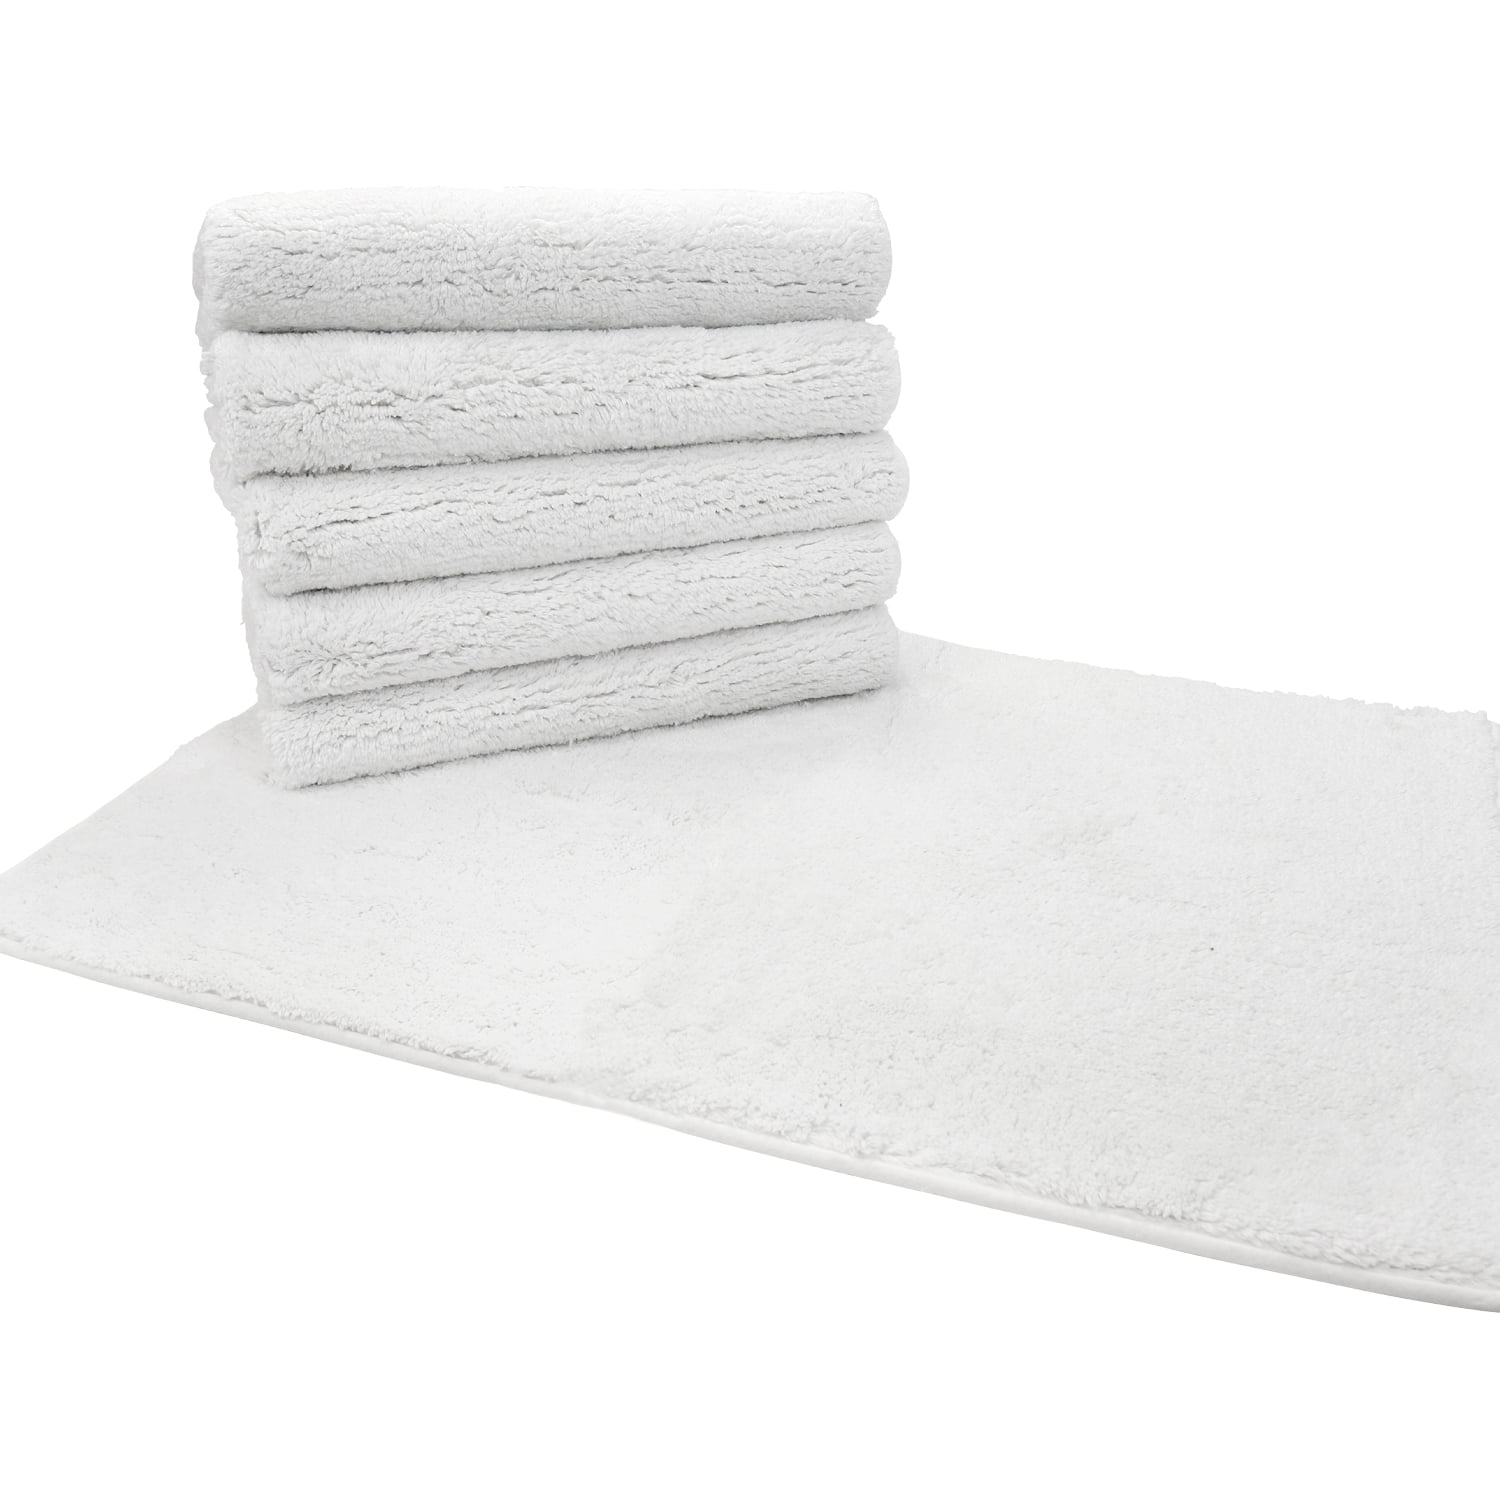 lot of 6 new beige ultra soft hotel bath mats 7# 20x30 